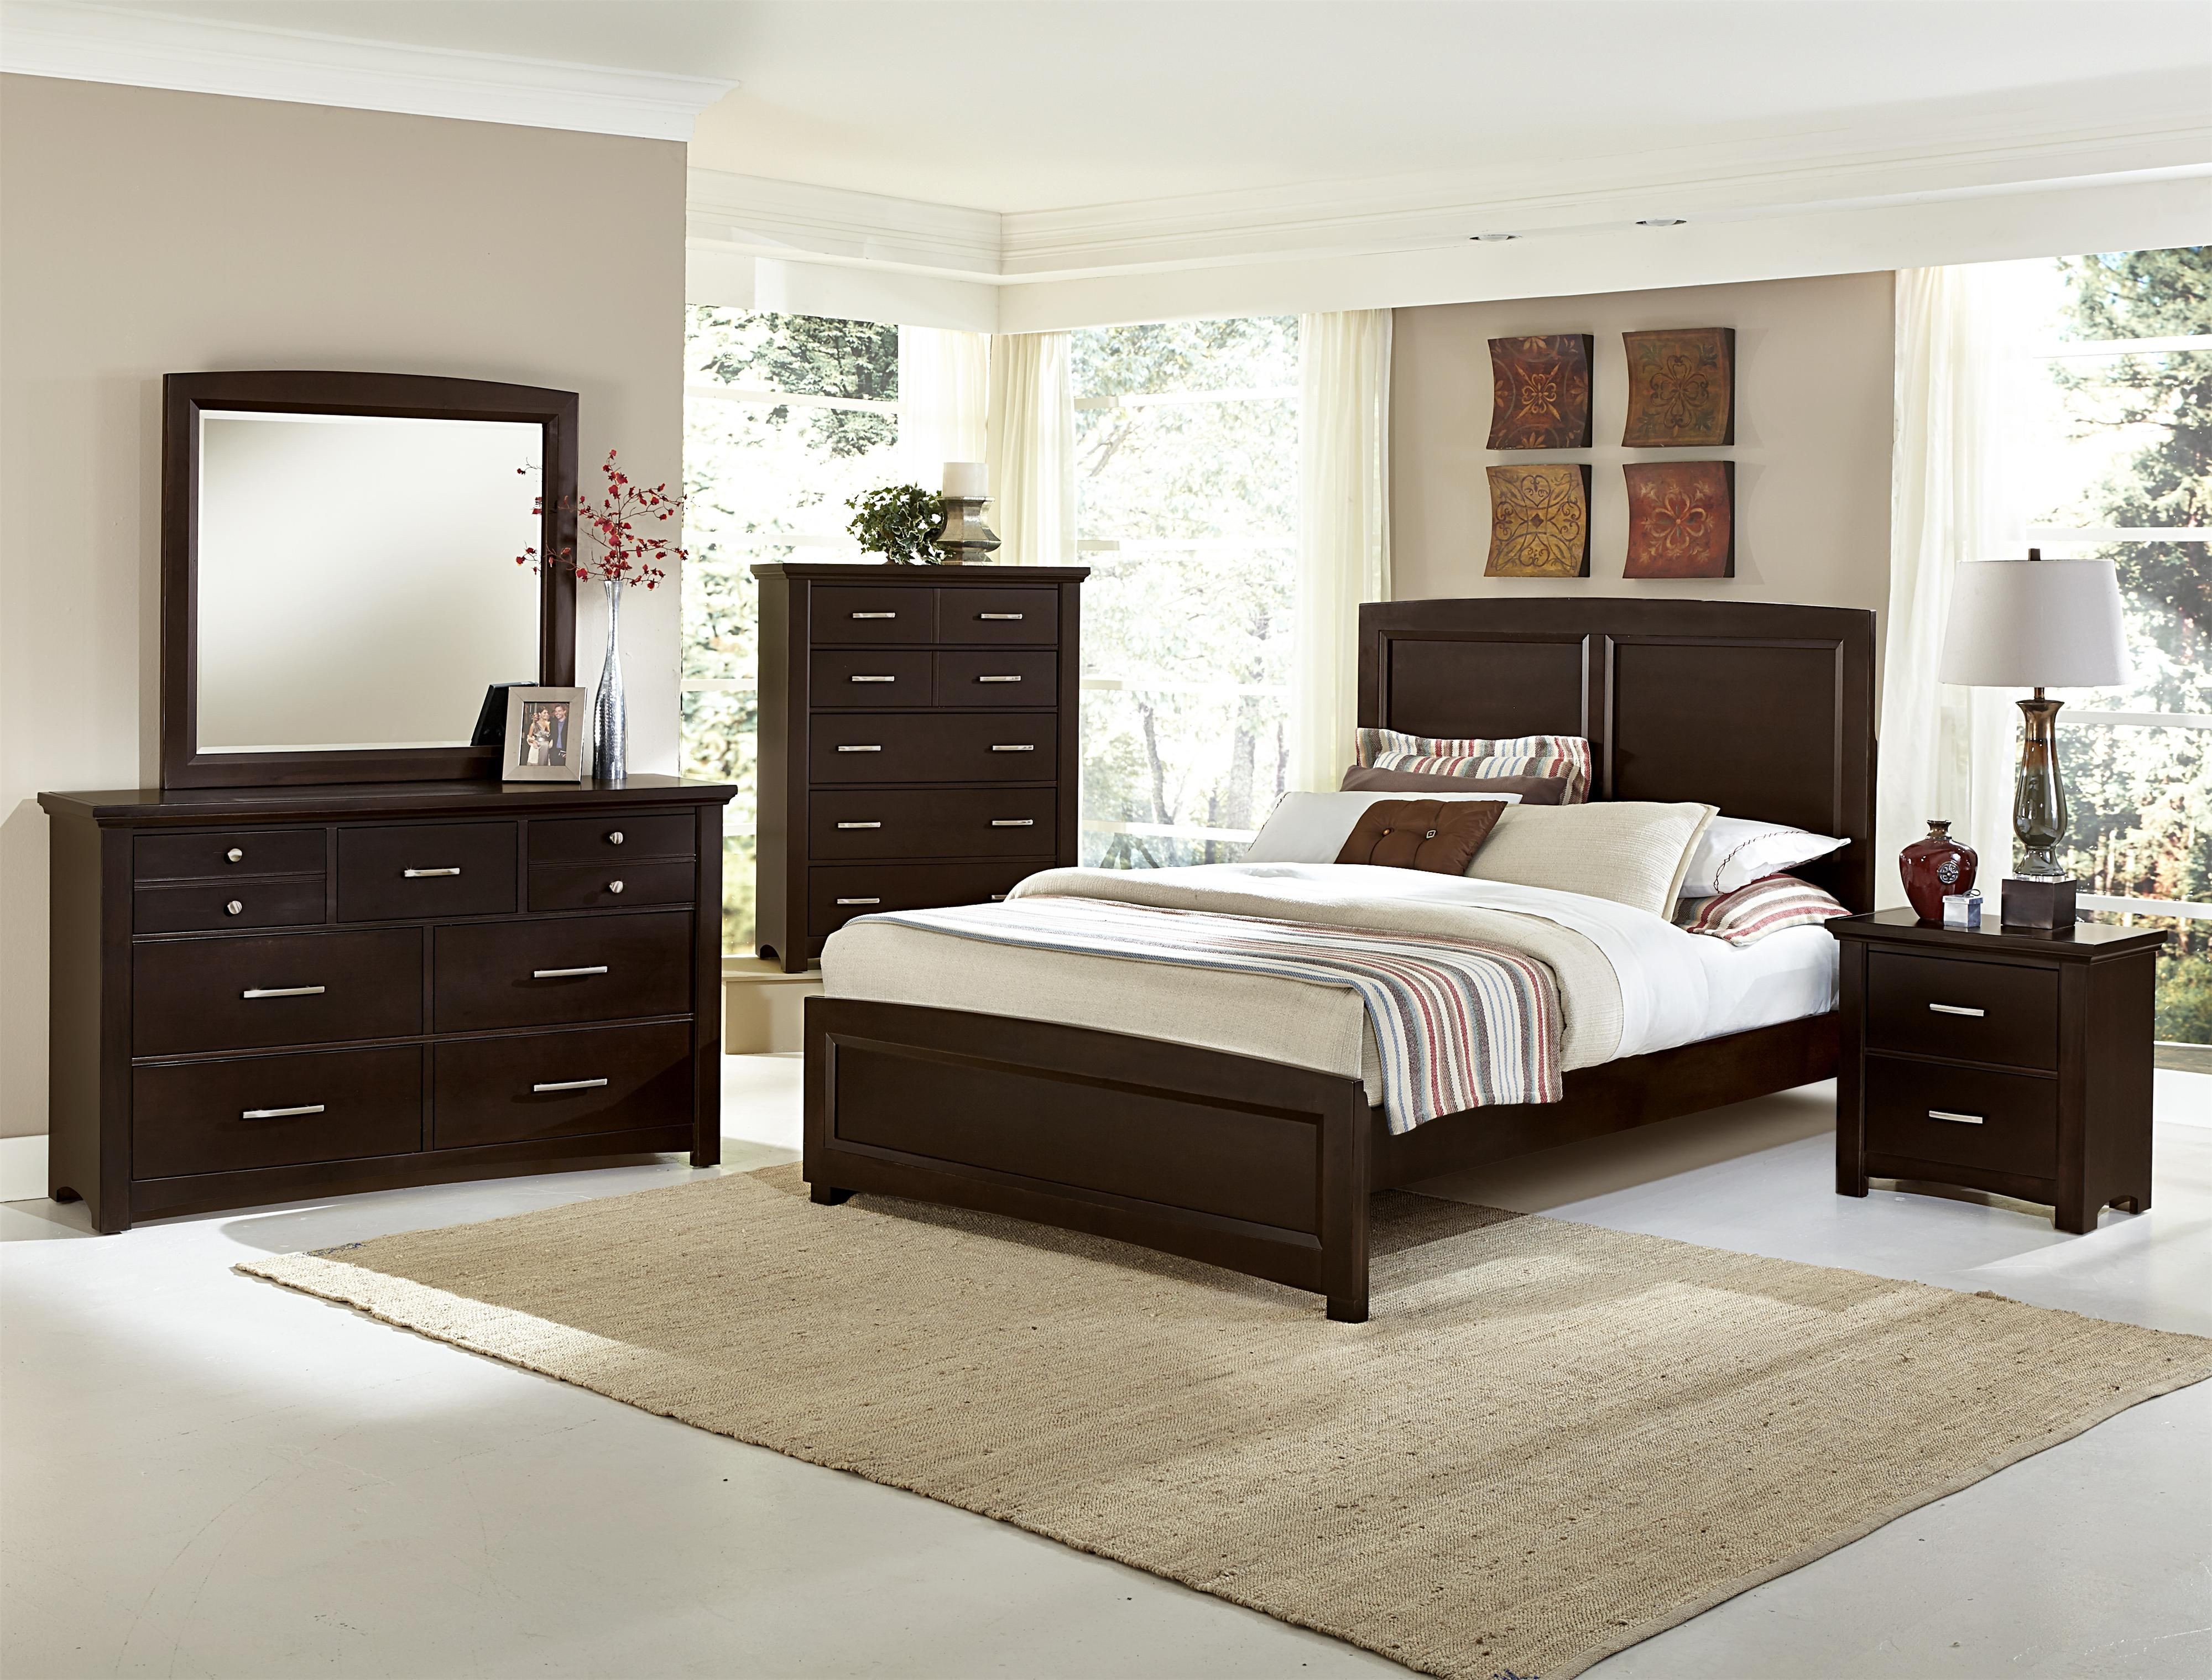 bassett peninsula bedroom furniture